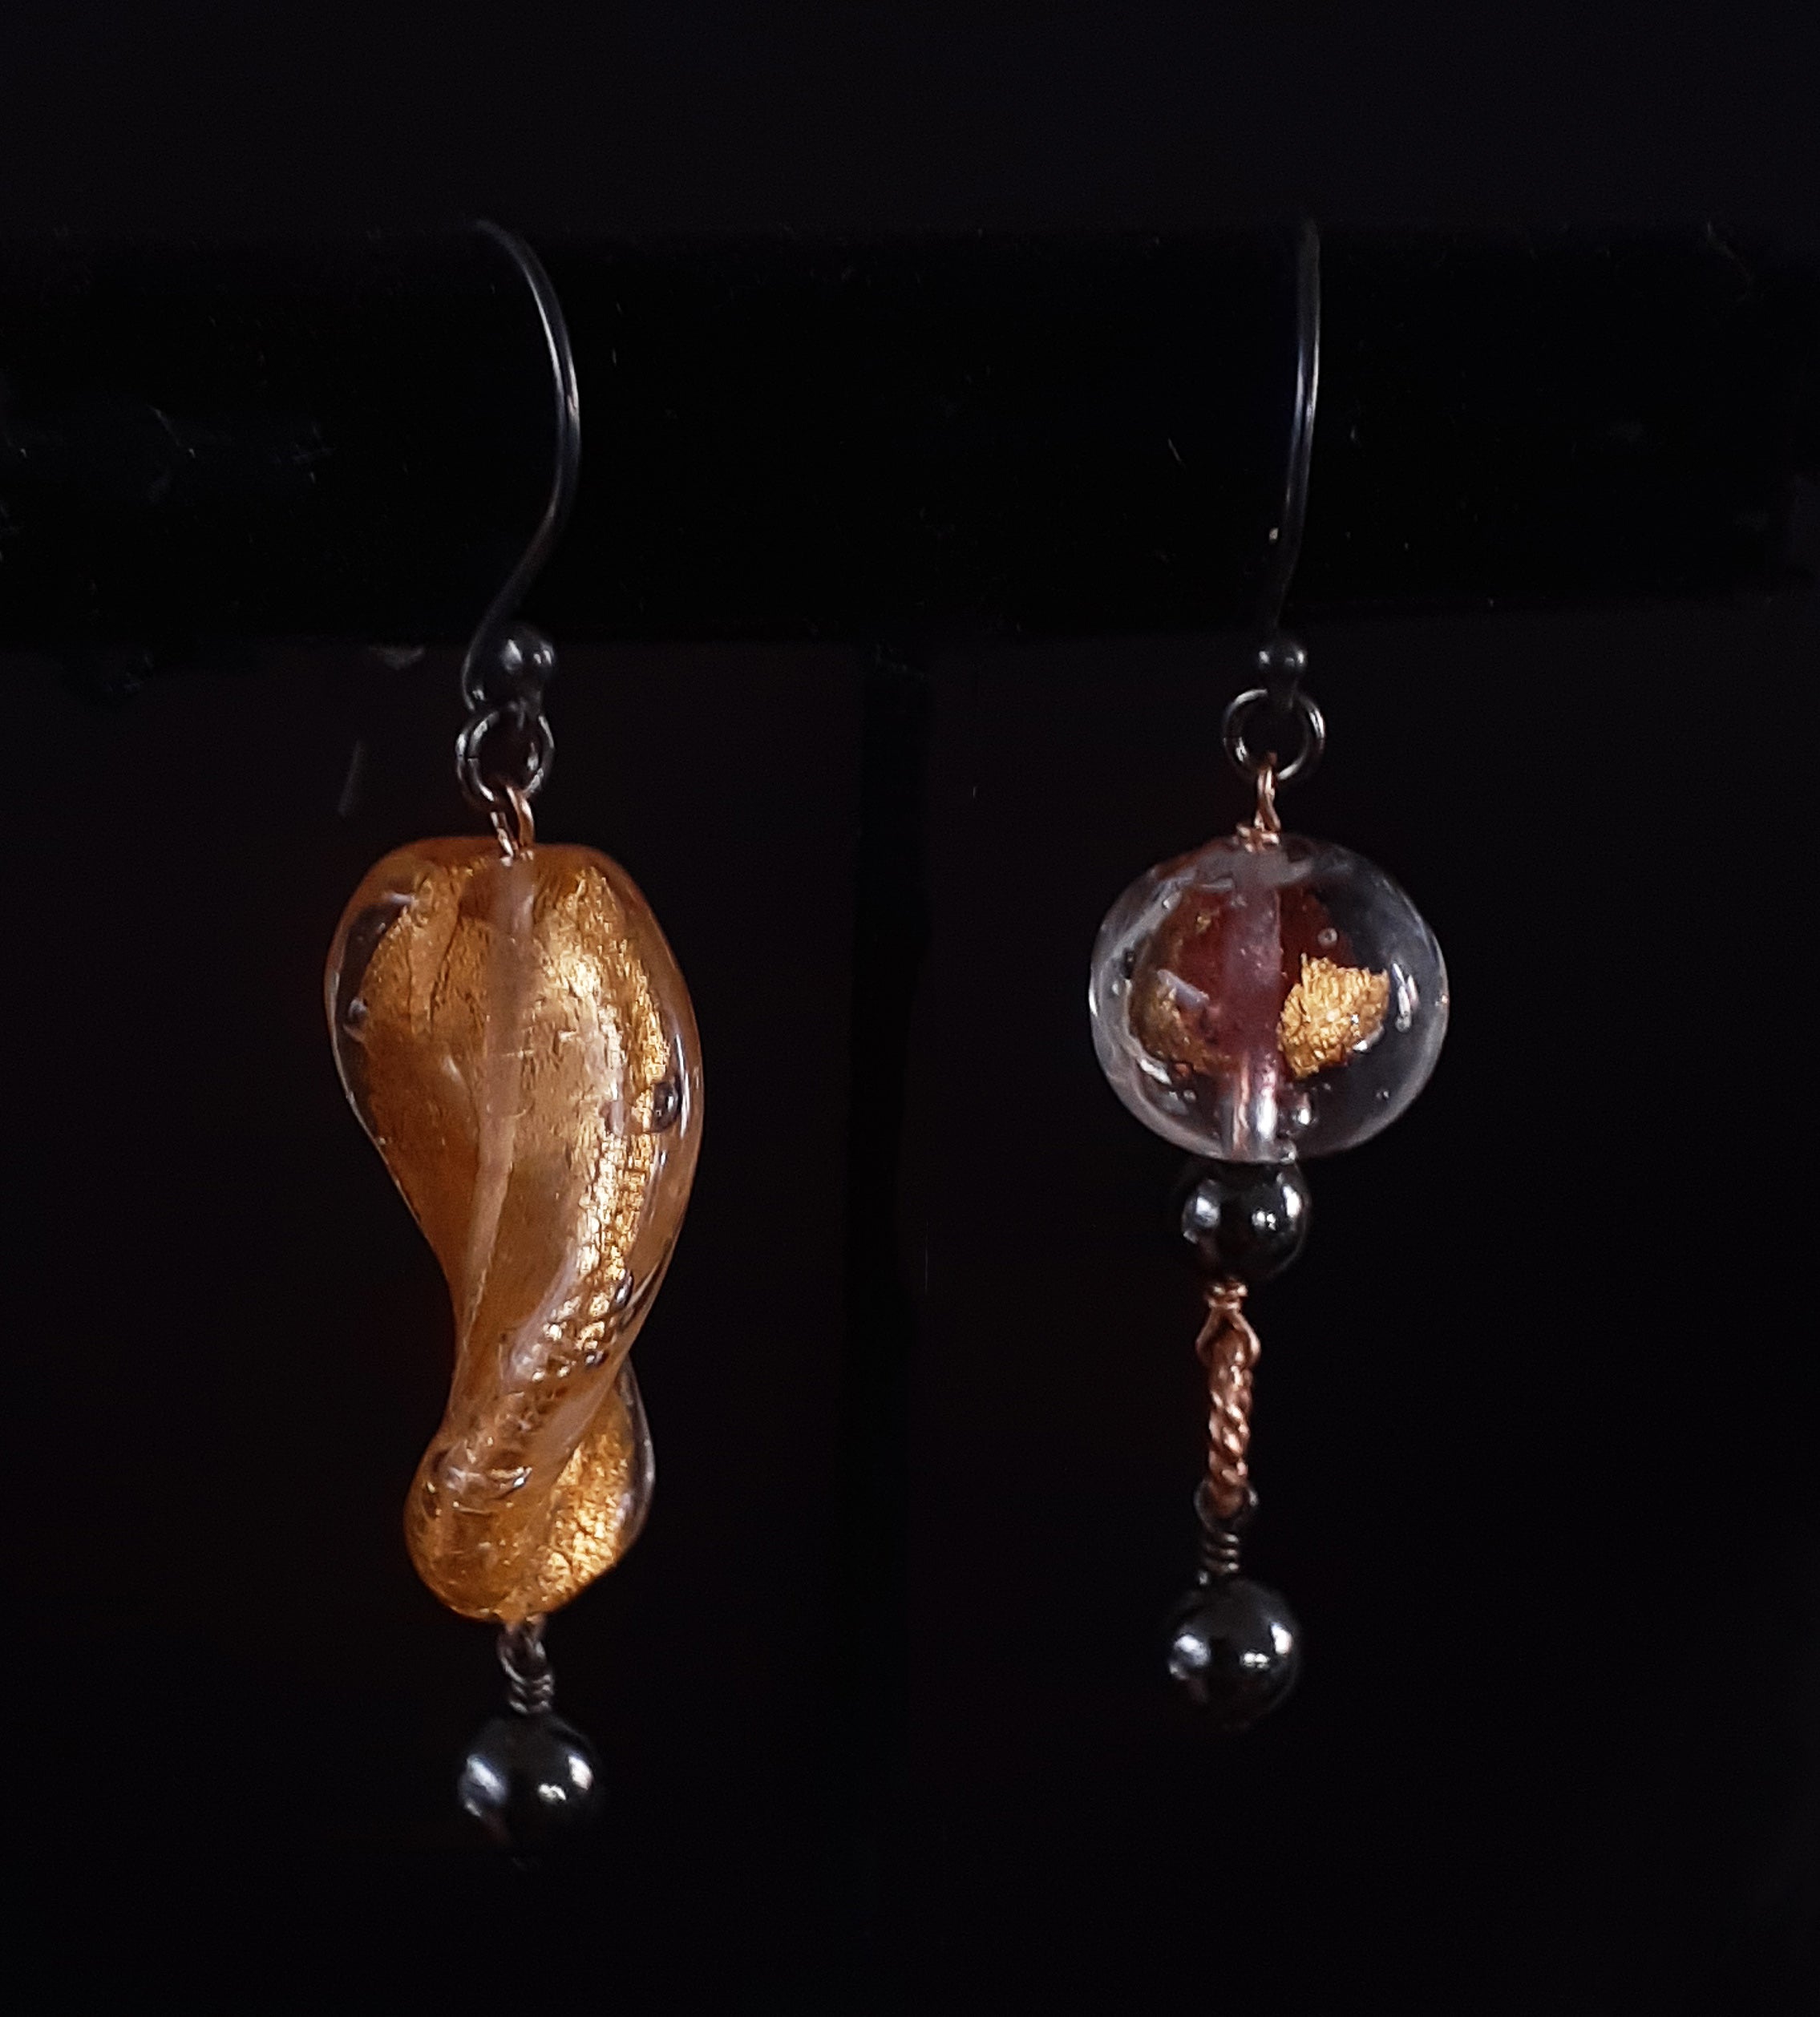 Venetian Glass Earrings - One of a Kind